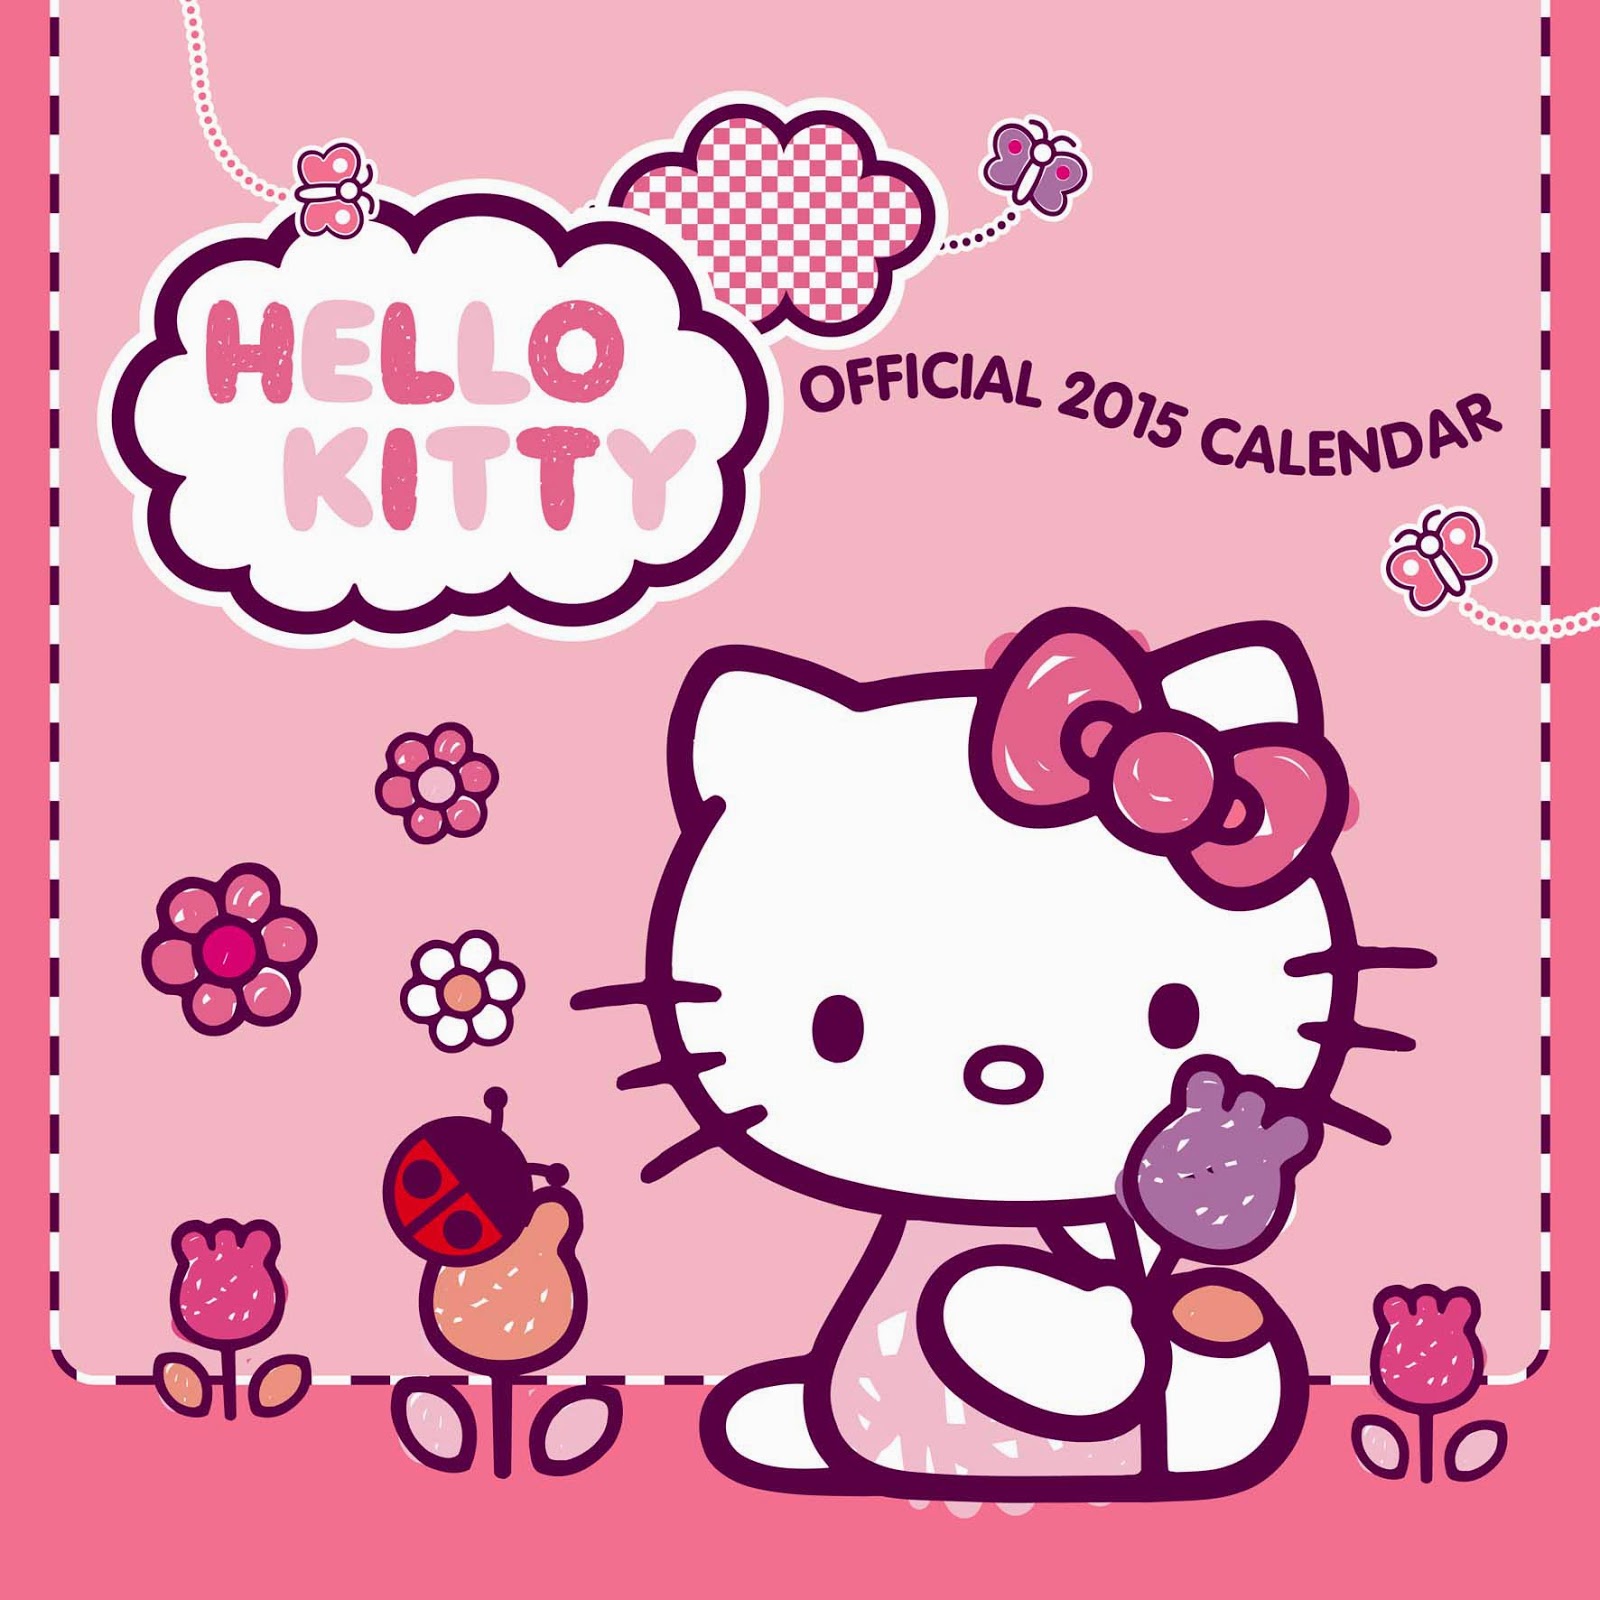 Gambar Wallpaper Hello Kitty Terbaru Kampung Wallpaper